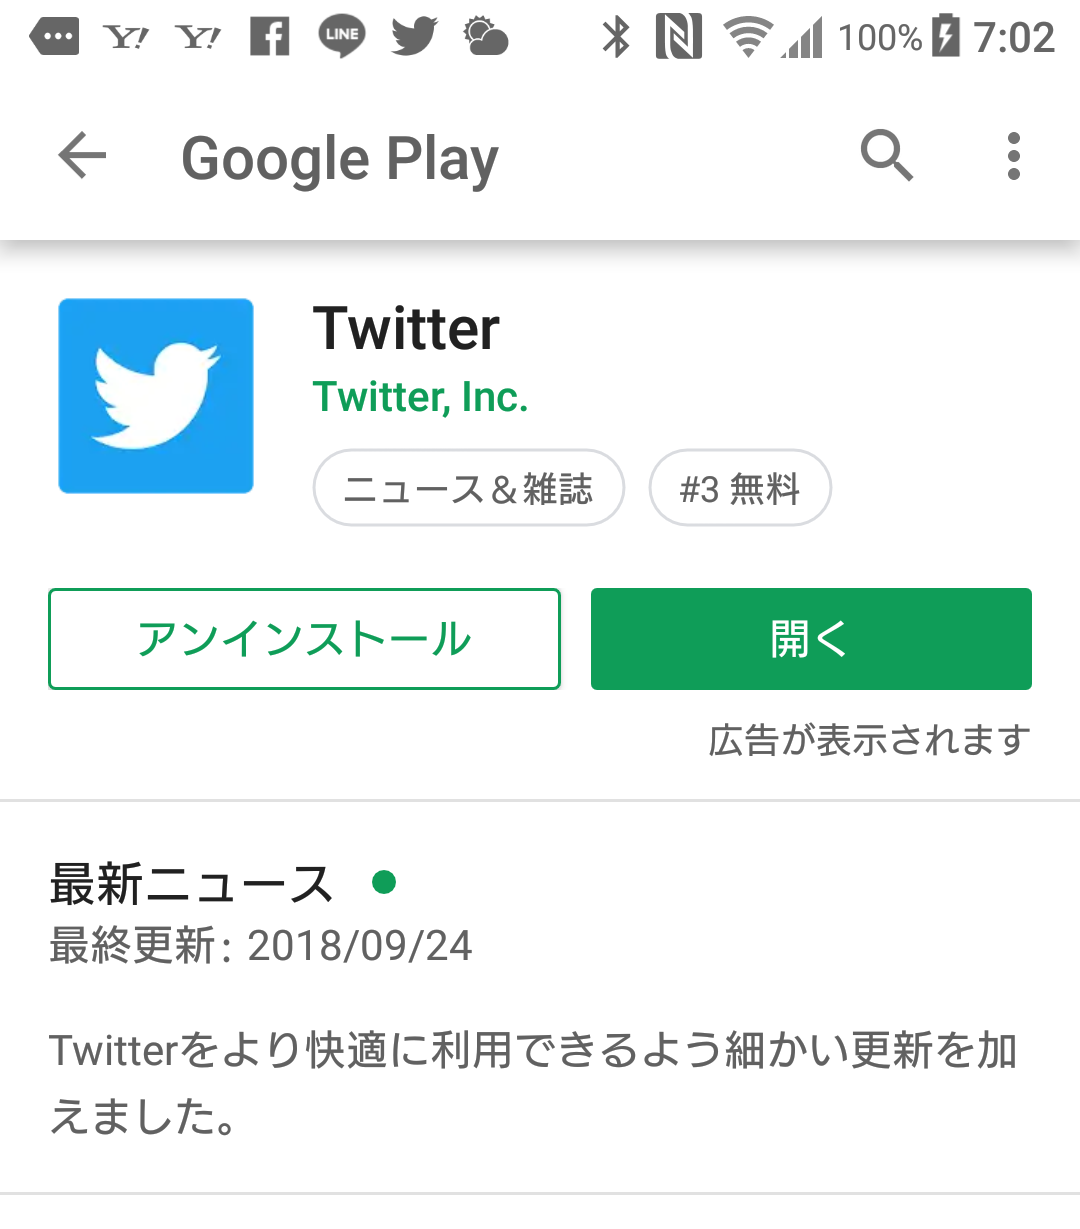 Android Twitterアプリが検索画面で落ちる 検索できない不具合発生中 18年9月29日